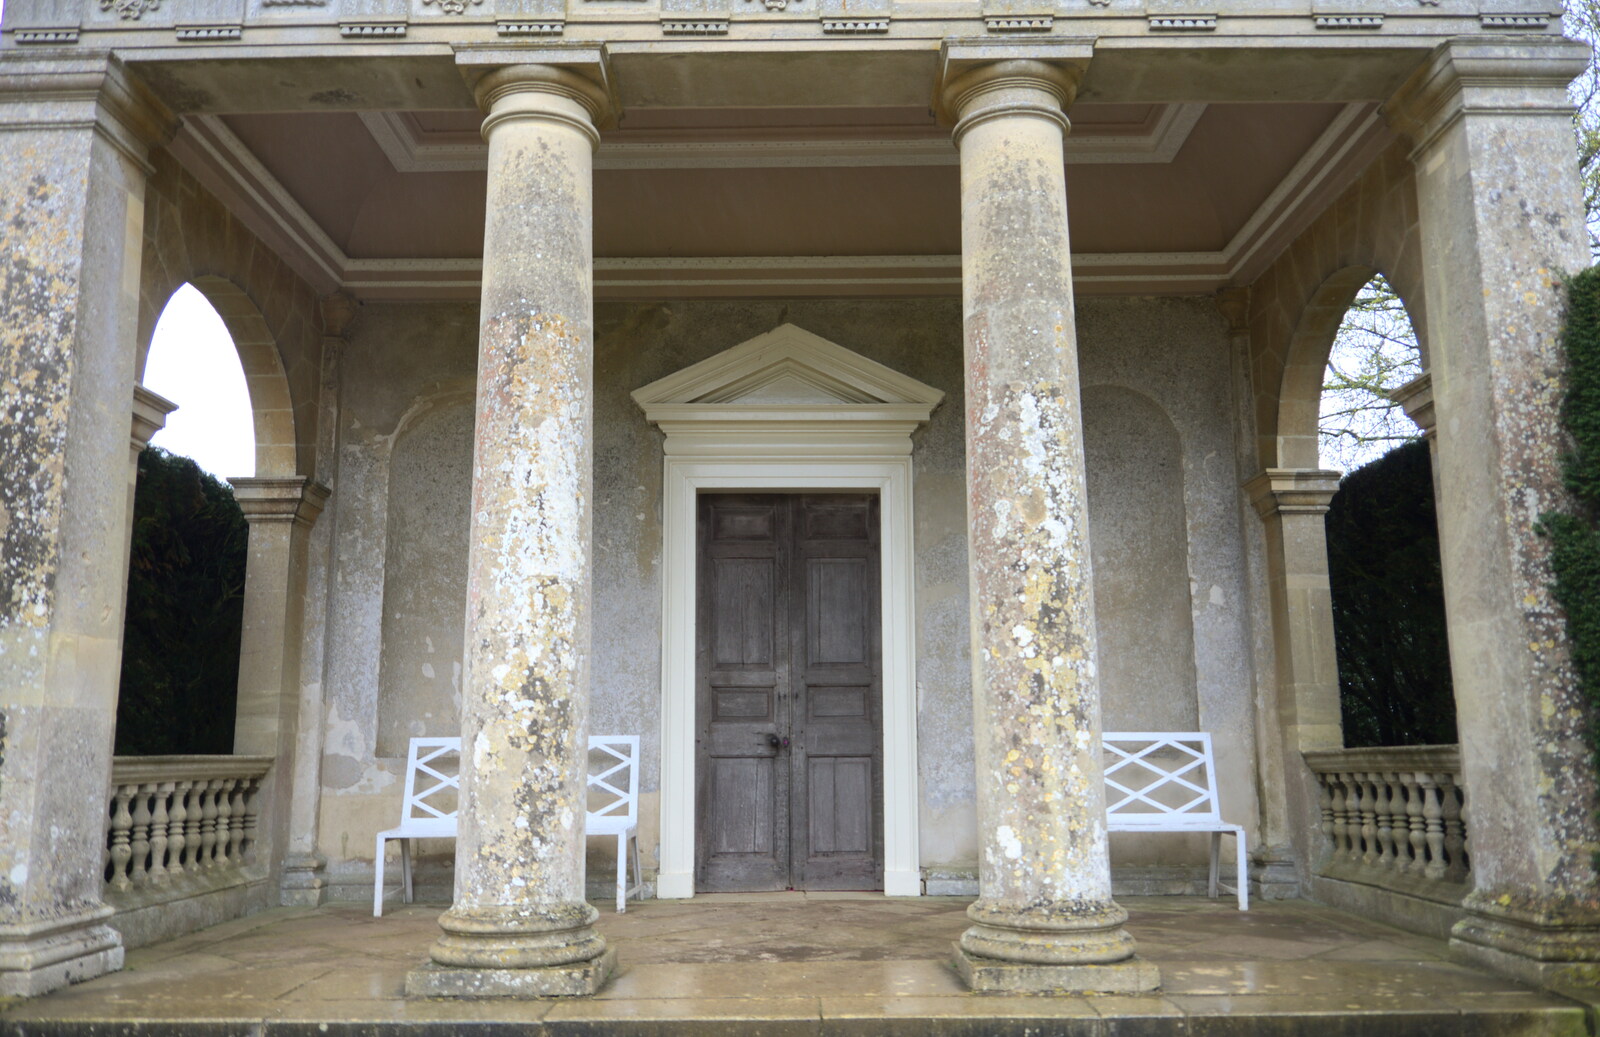 Palladian columns from A Trip to Blickling Hall, Aylsham, Norfolk - 29th April 2018